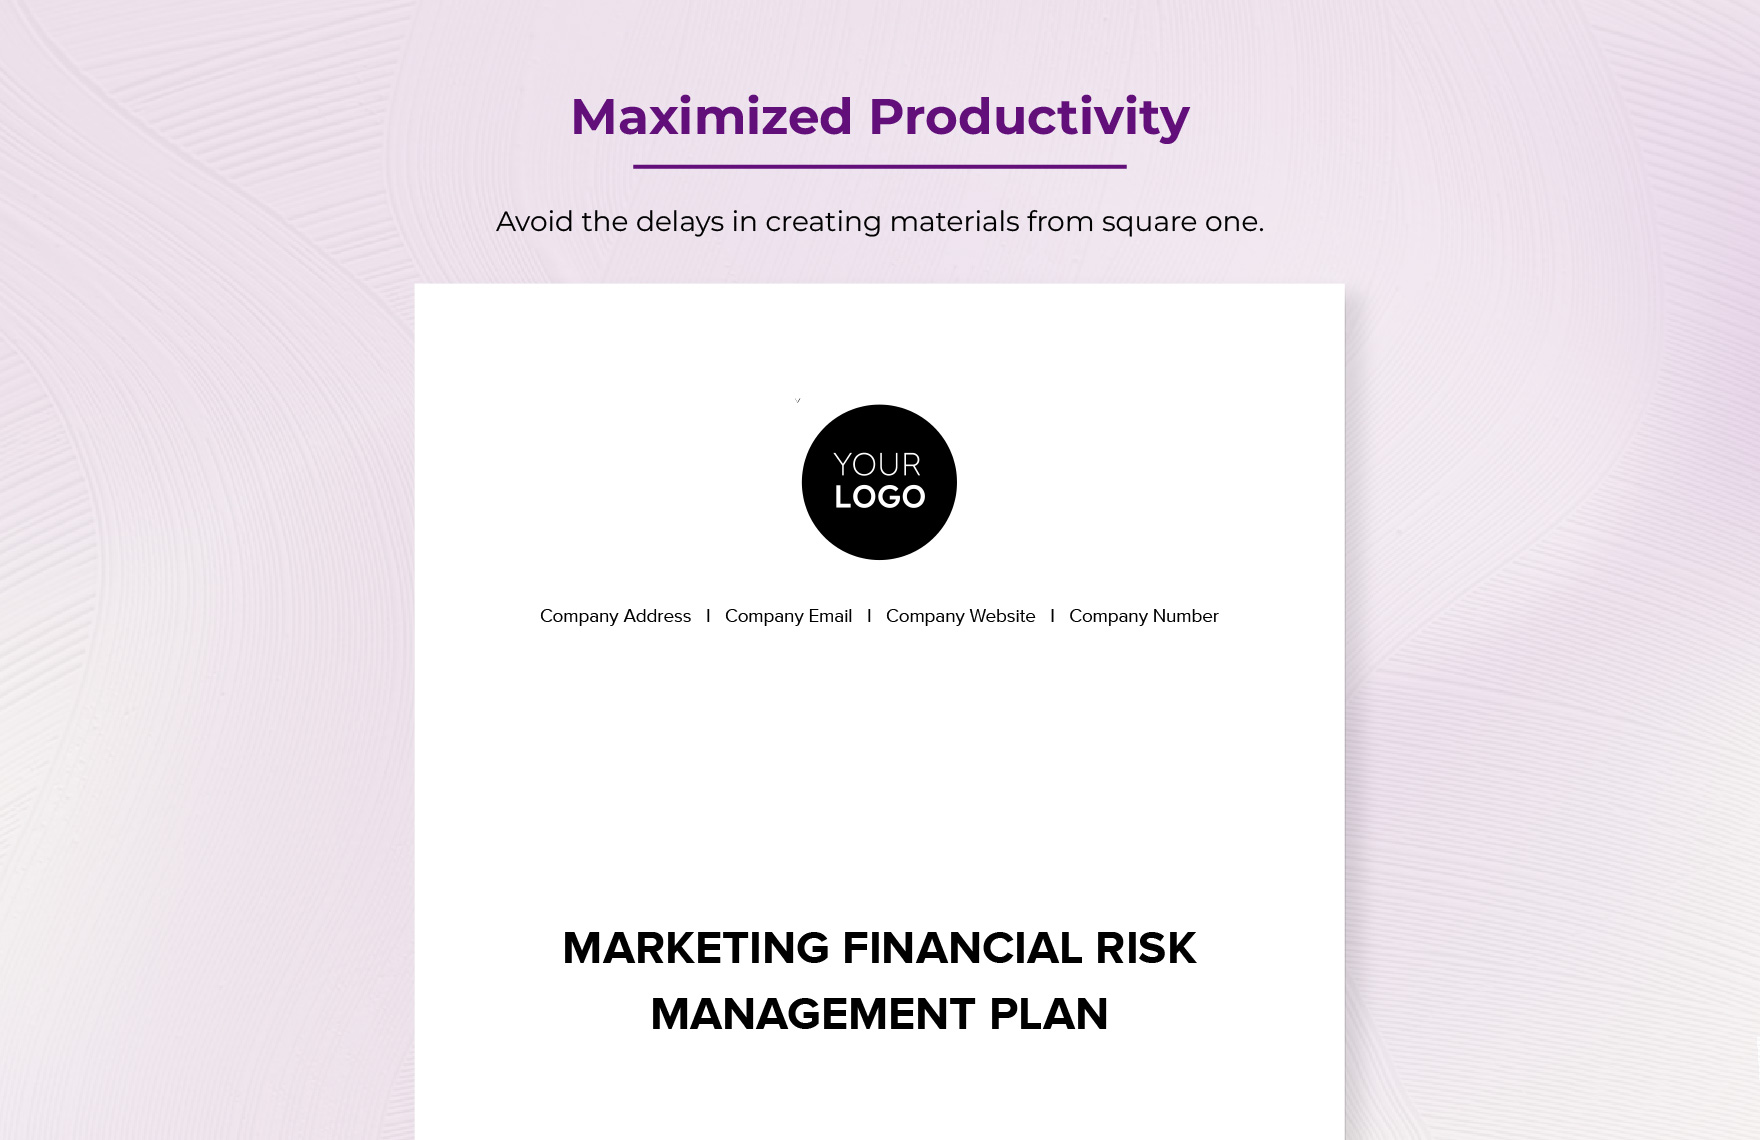 Marketing Financial Risk Management Plan Template